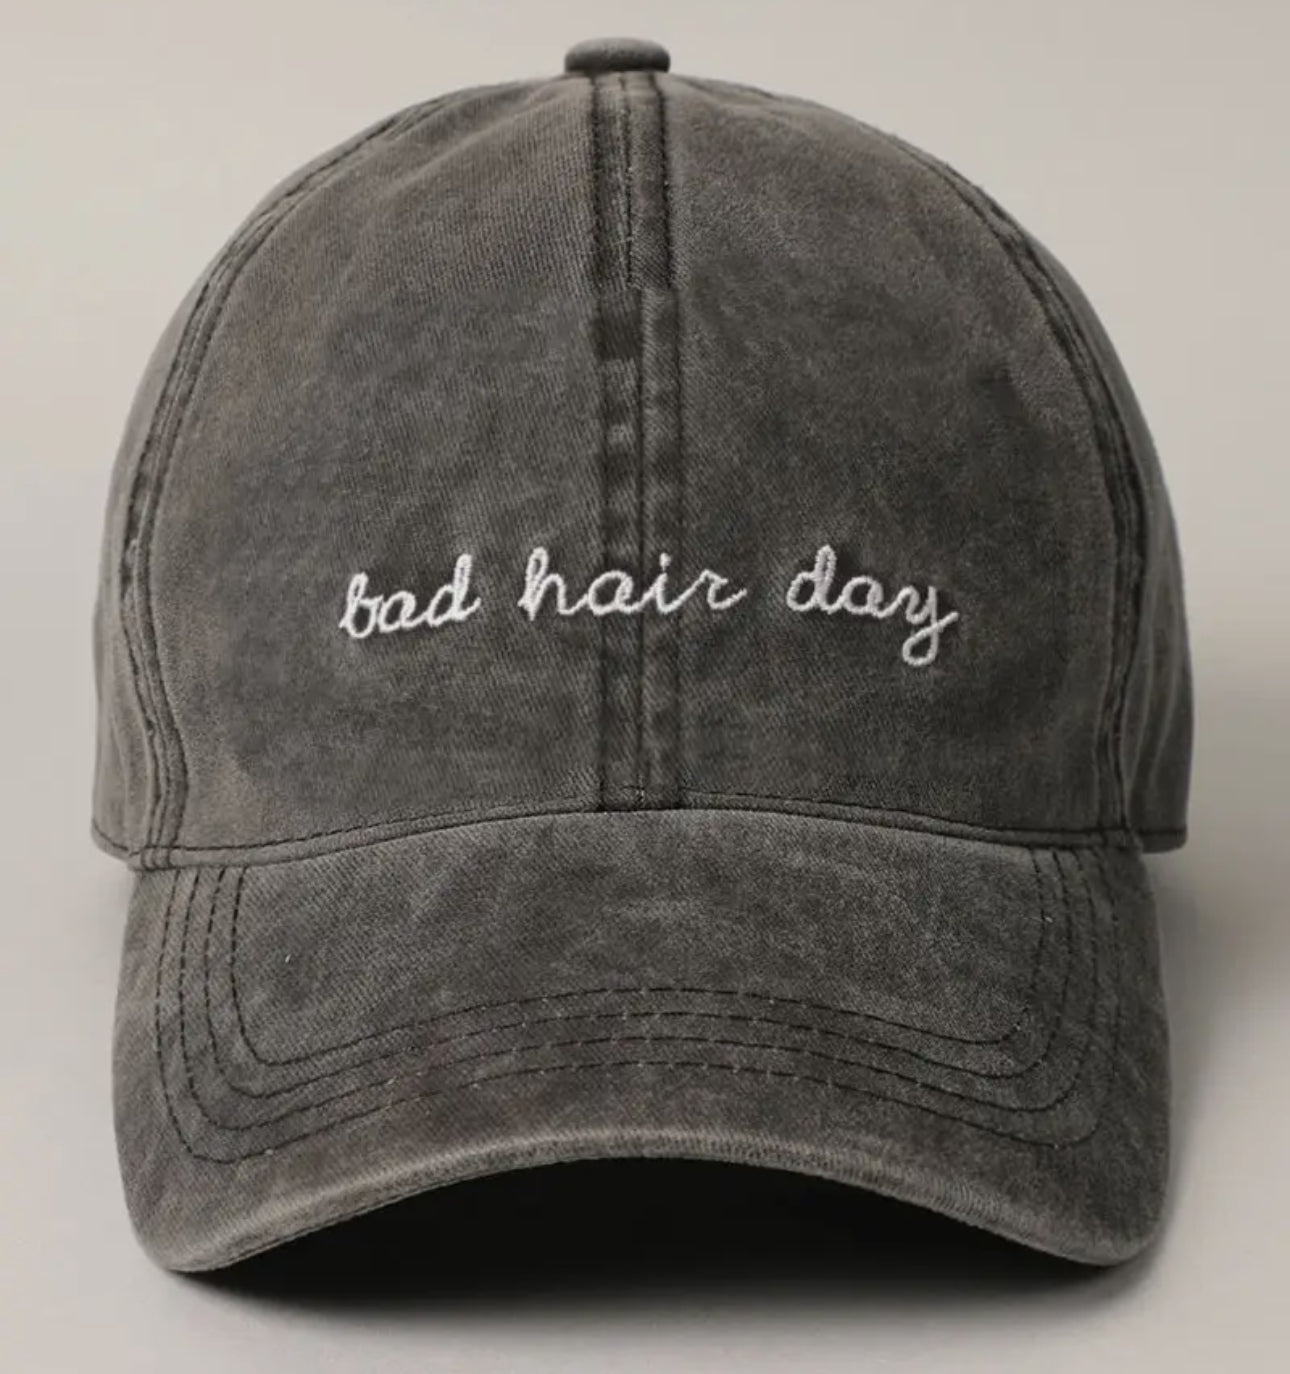 Baseball cap bad hair day